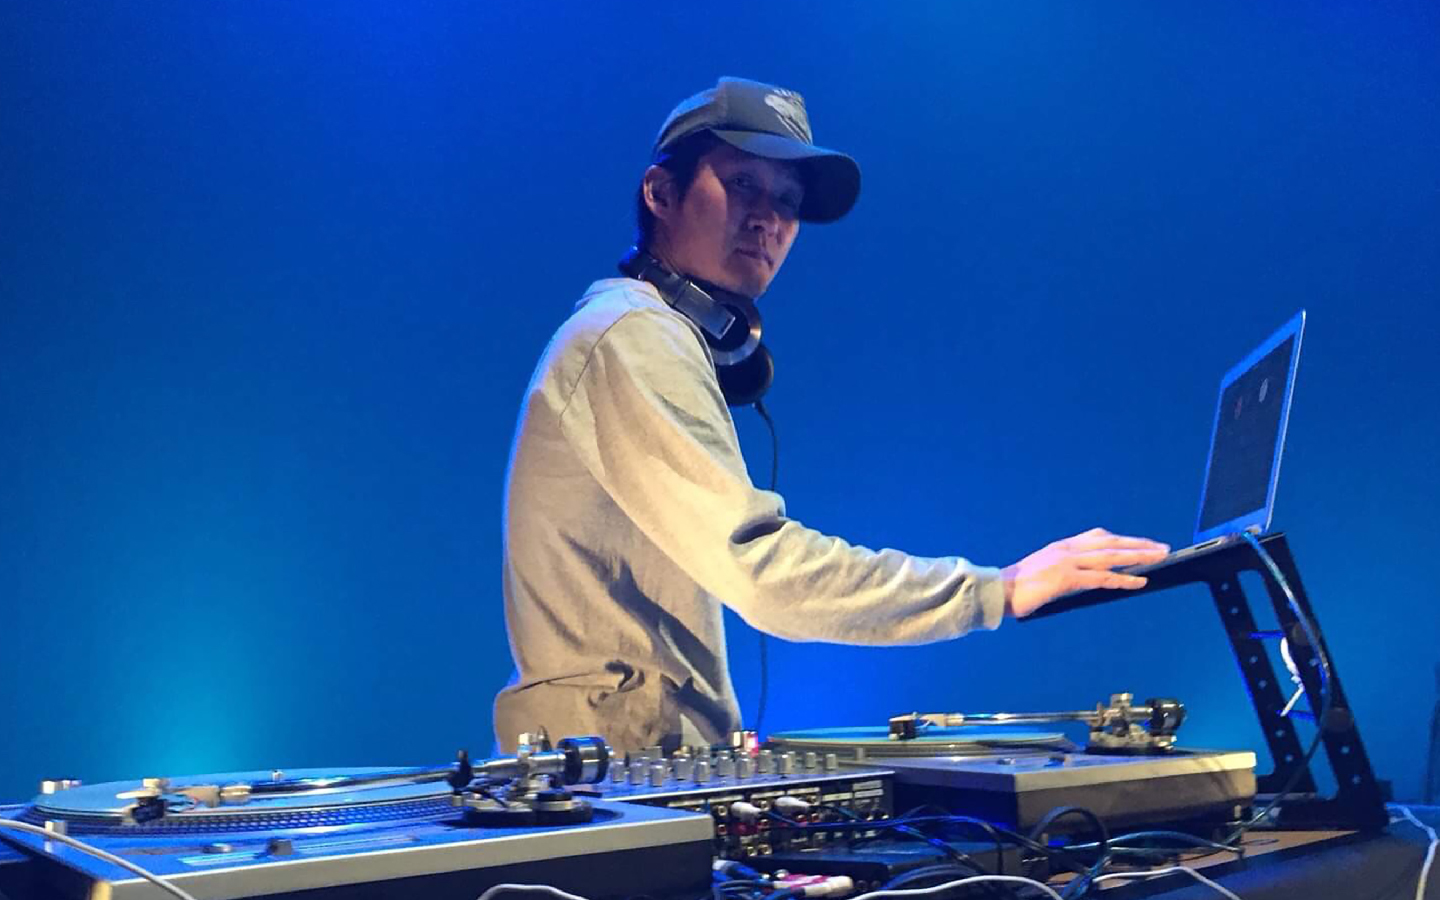 DJ tetsu a.k.a. Nippa